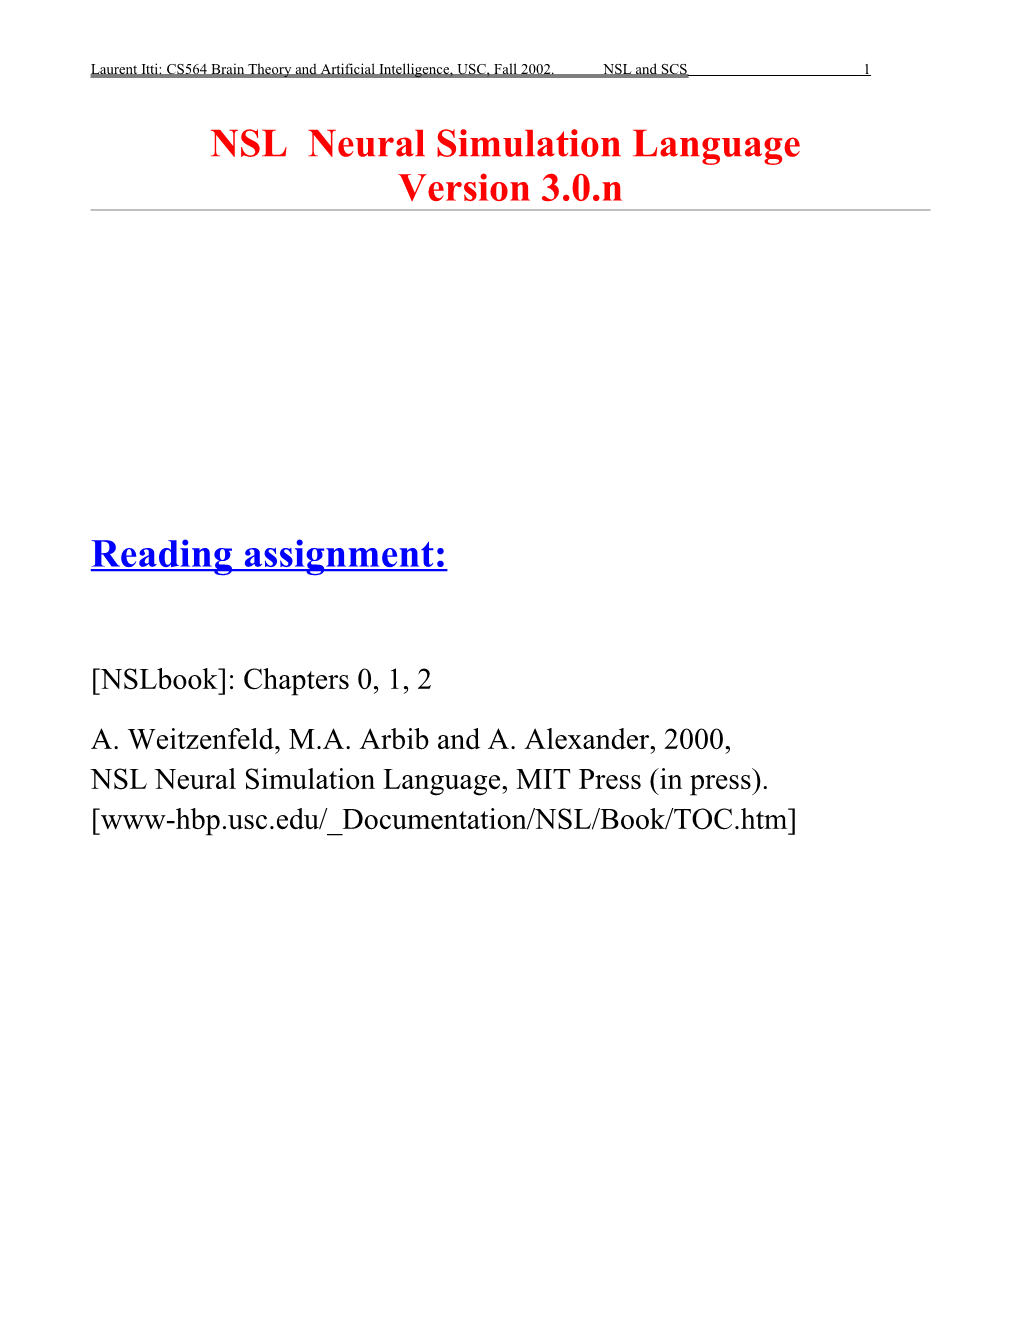 NSL Neural Simulation Language